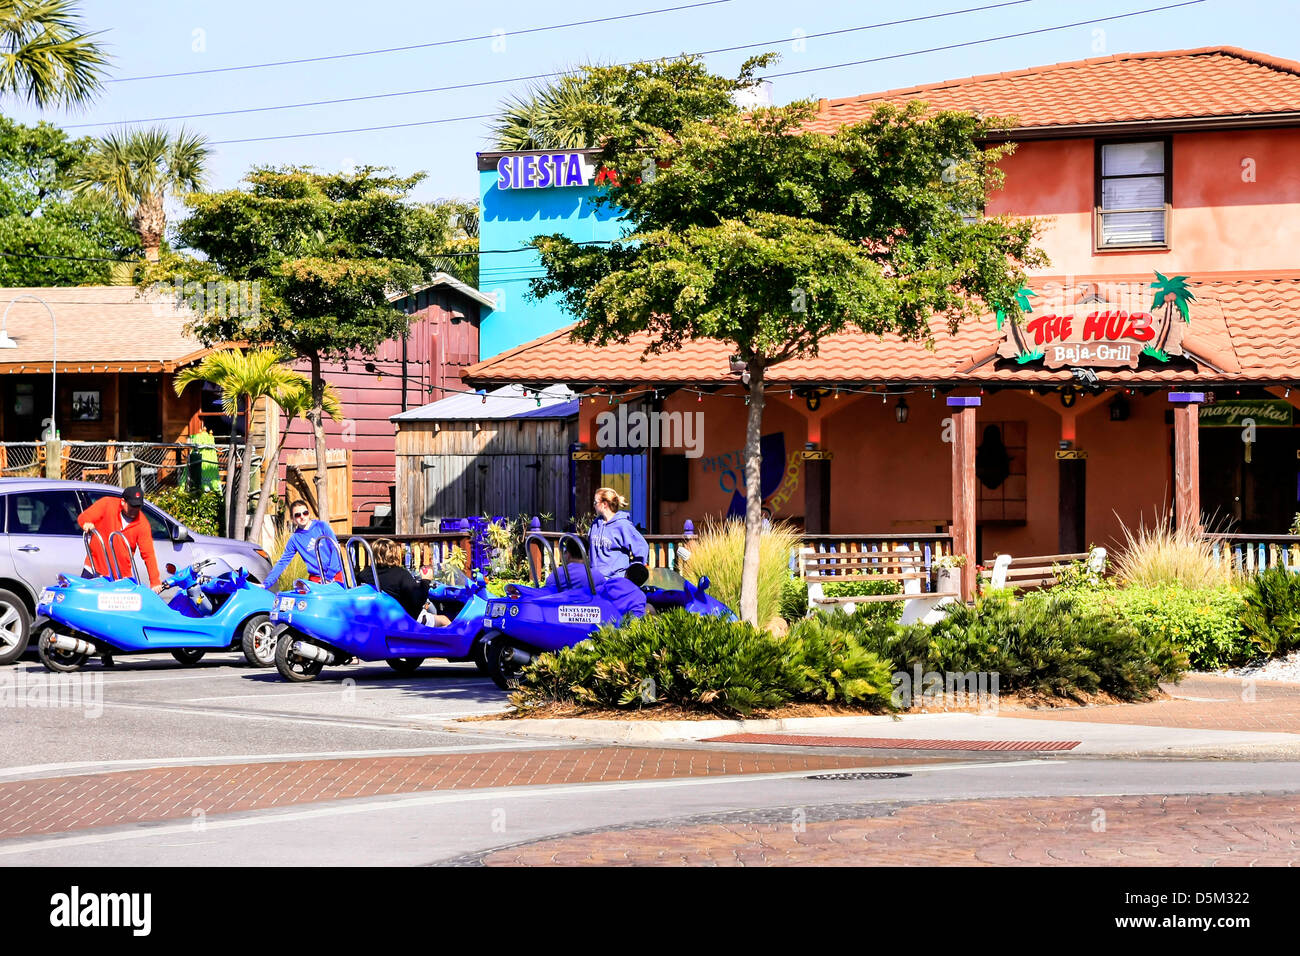 Little tourist trikes parked outside a bar on Siesta Key Island Florida Stock Photo